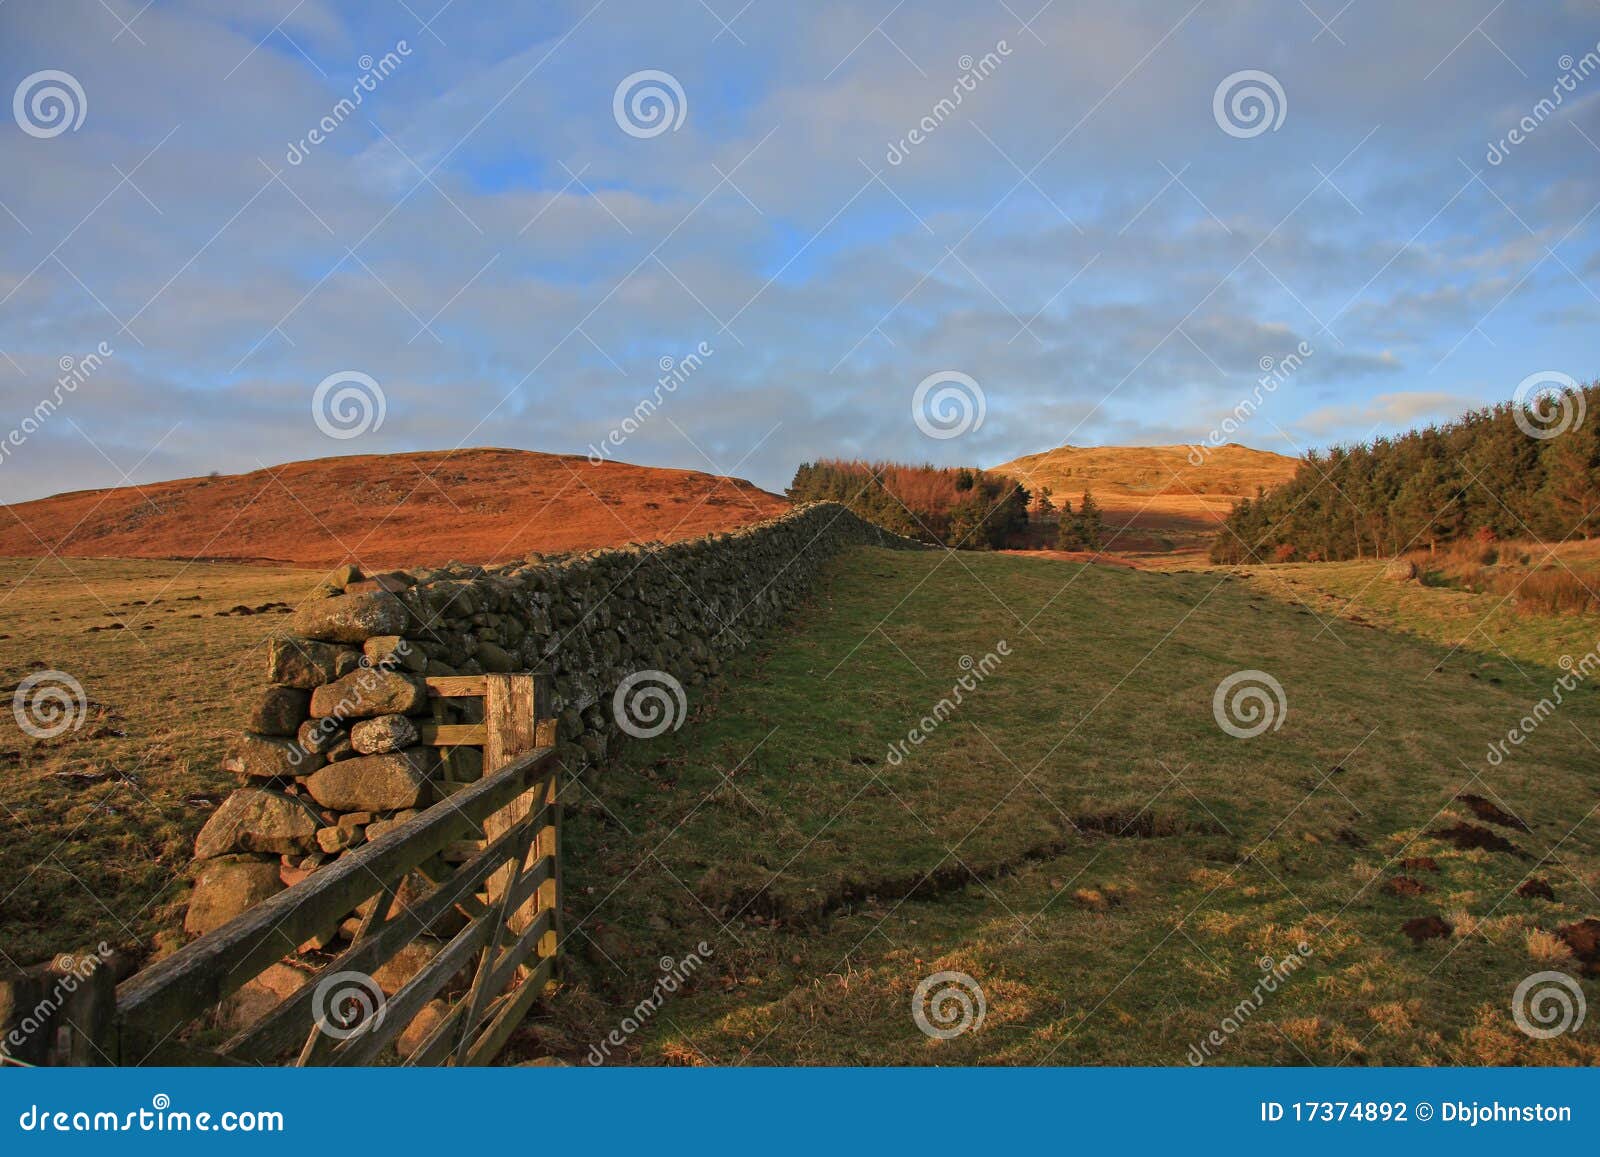 dry stone wall, northumberland, england